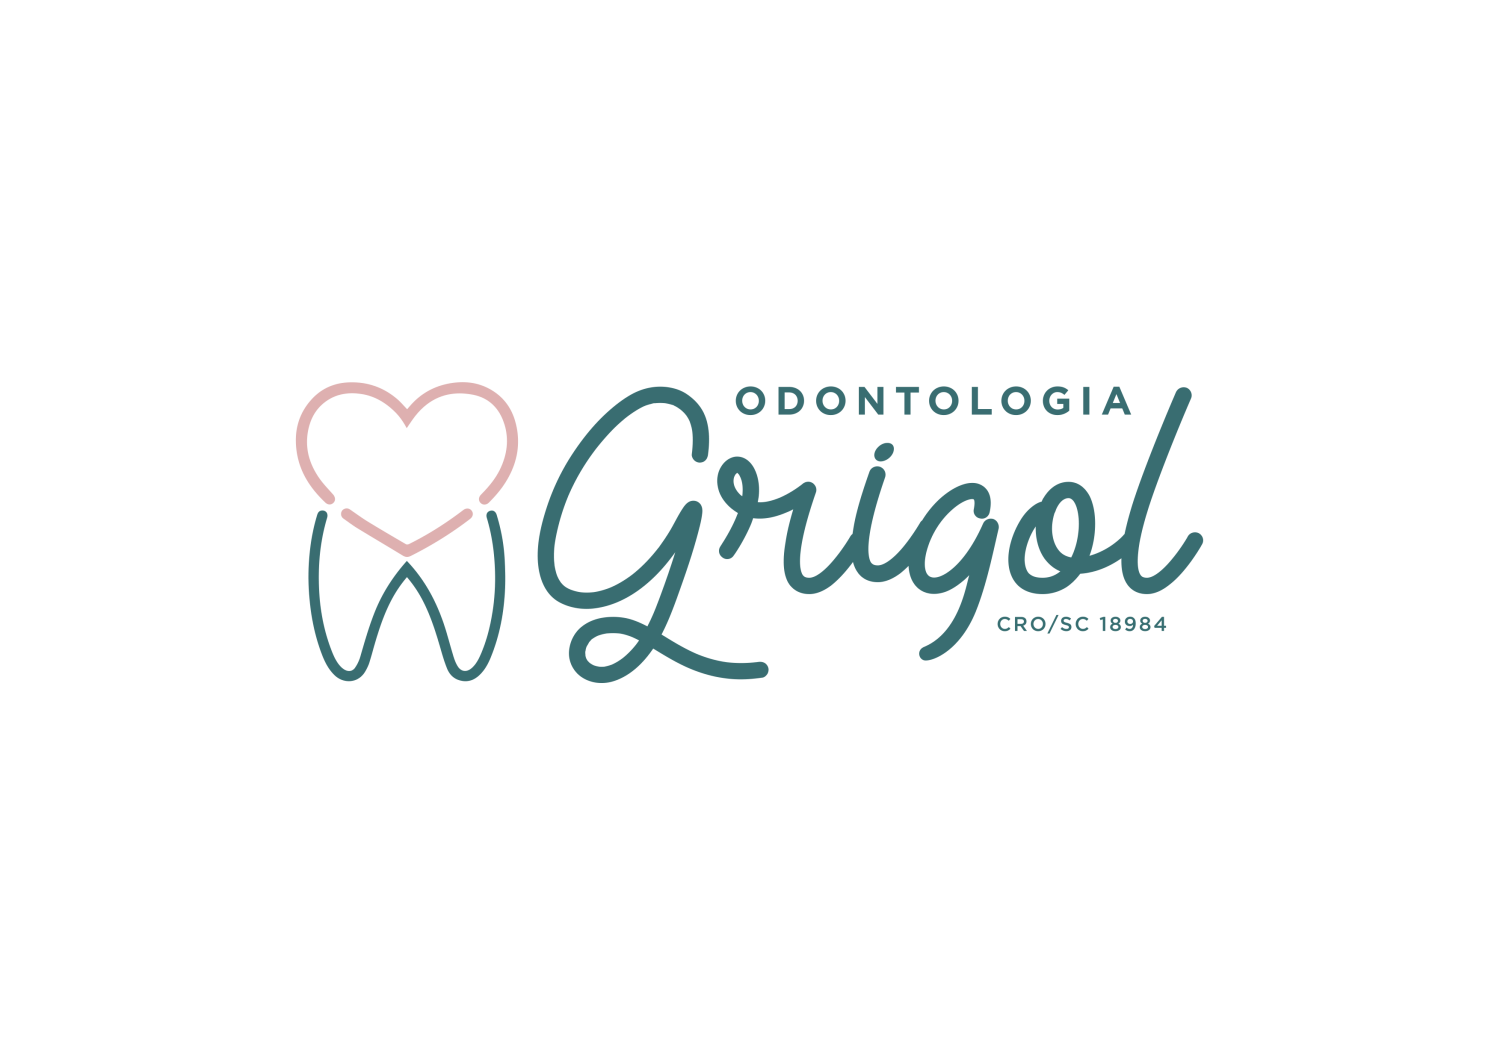 Odontologia Grigol